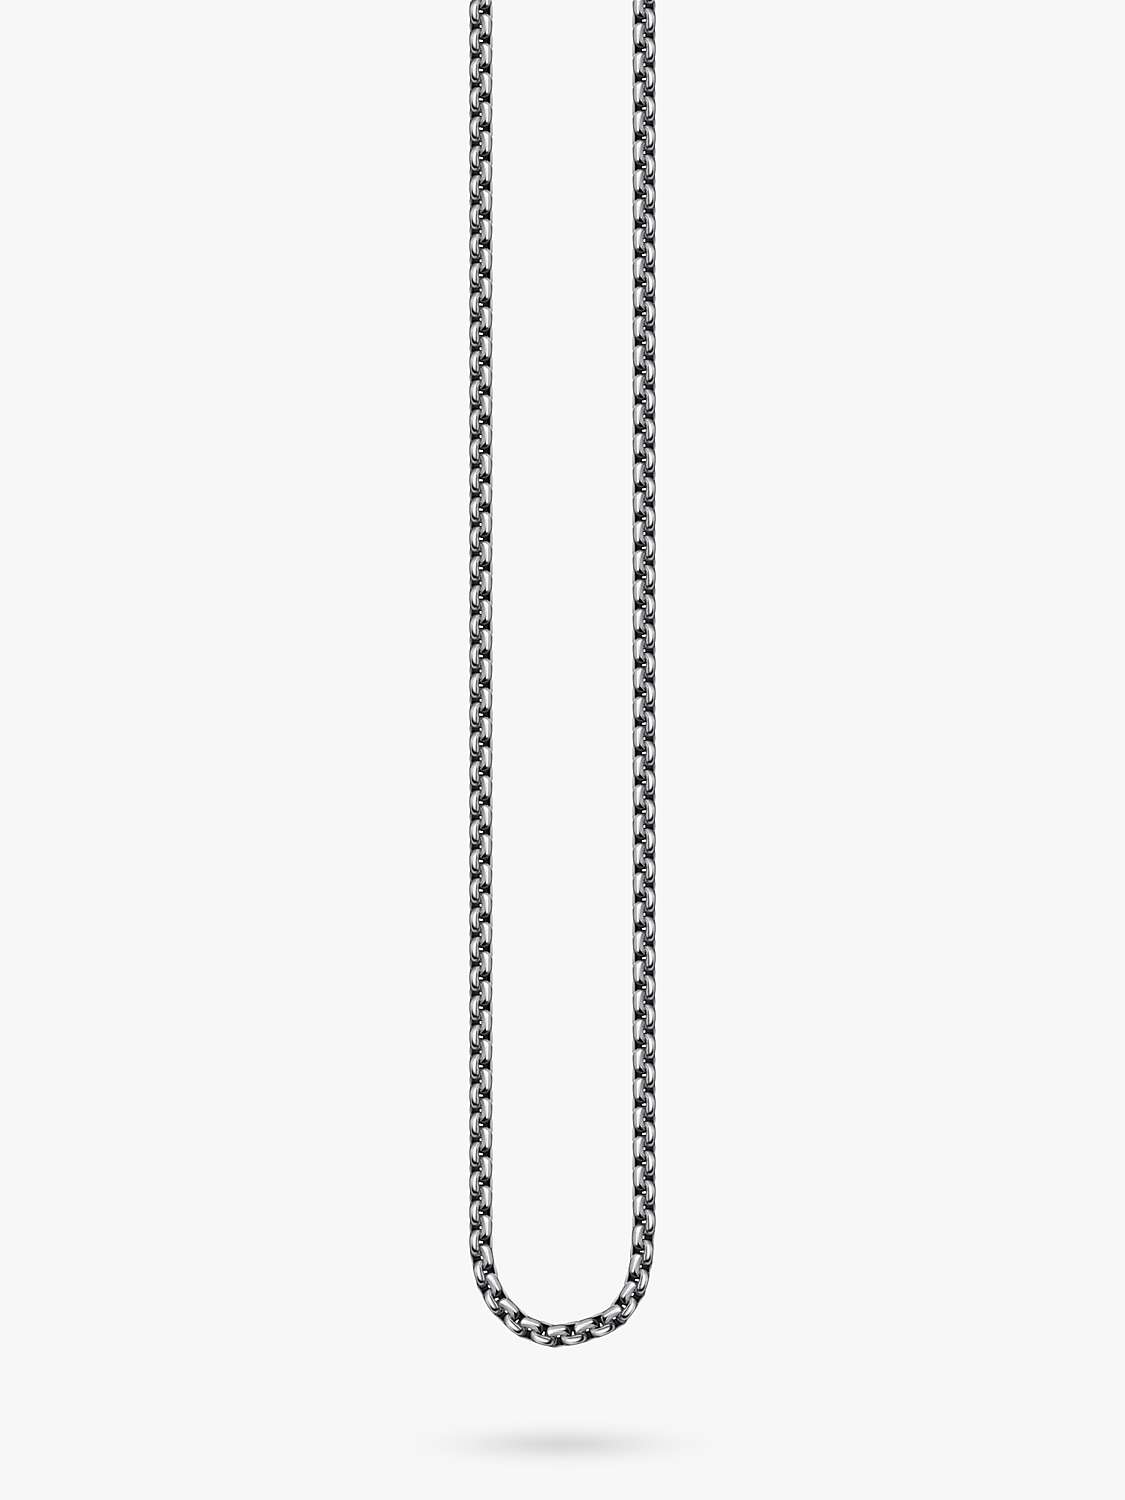 Buy THOMAS SABO Men's Venetian Chain Necklace, Silver Online at johnlewis.com